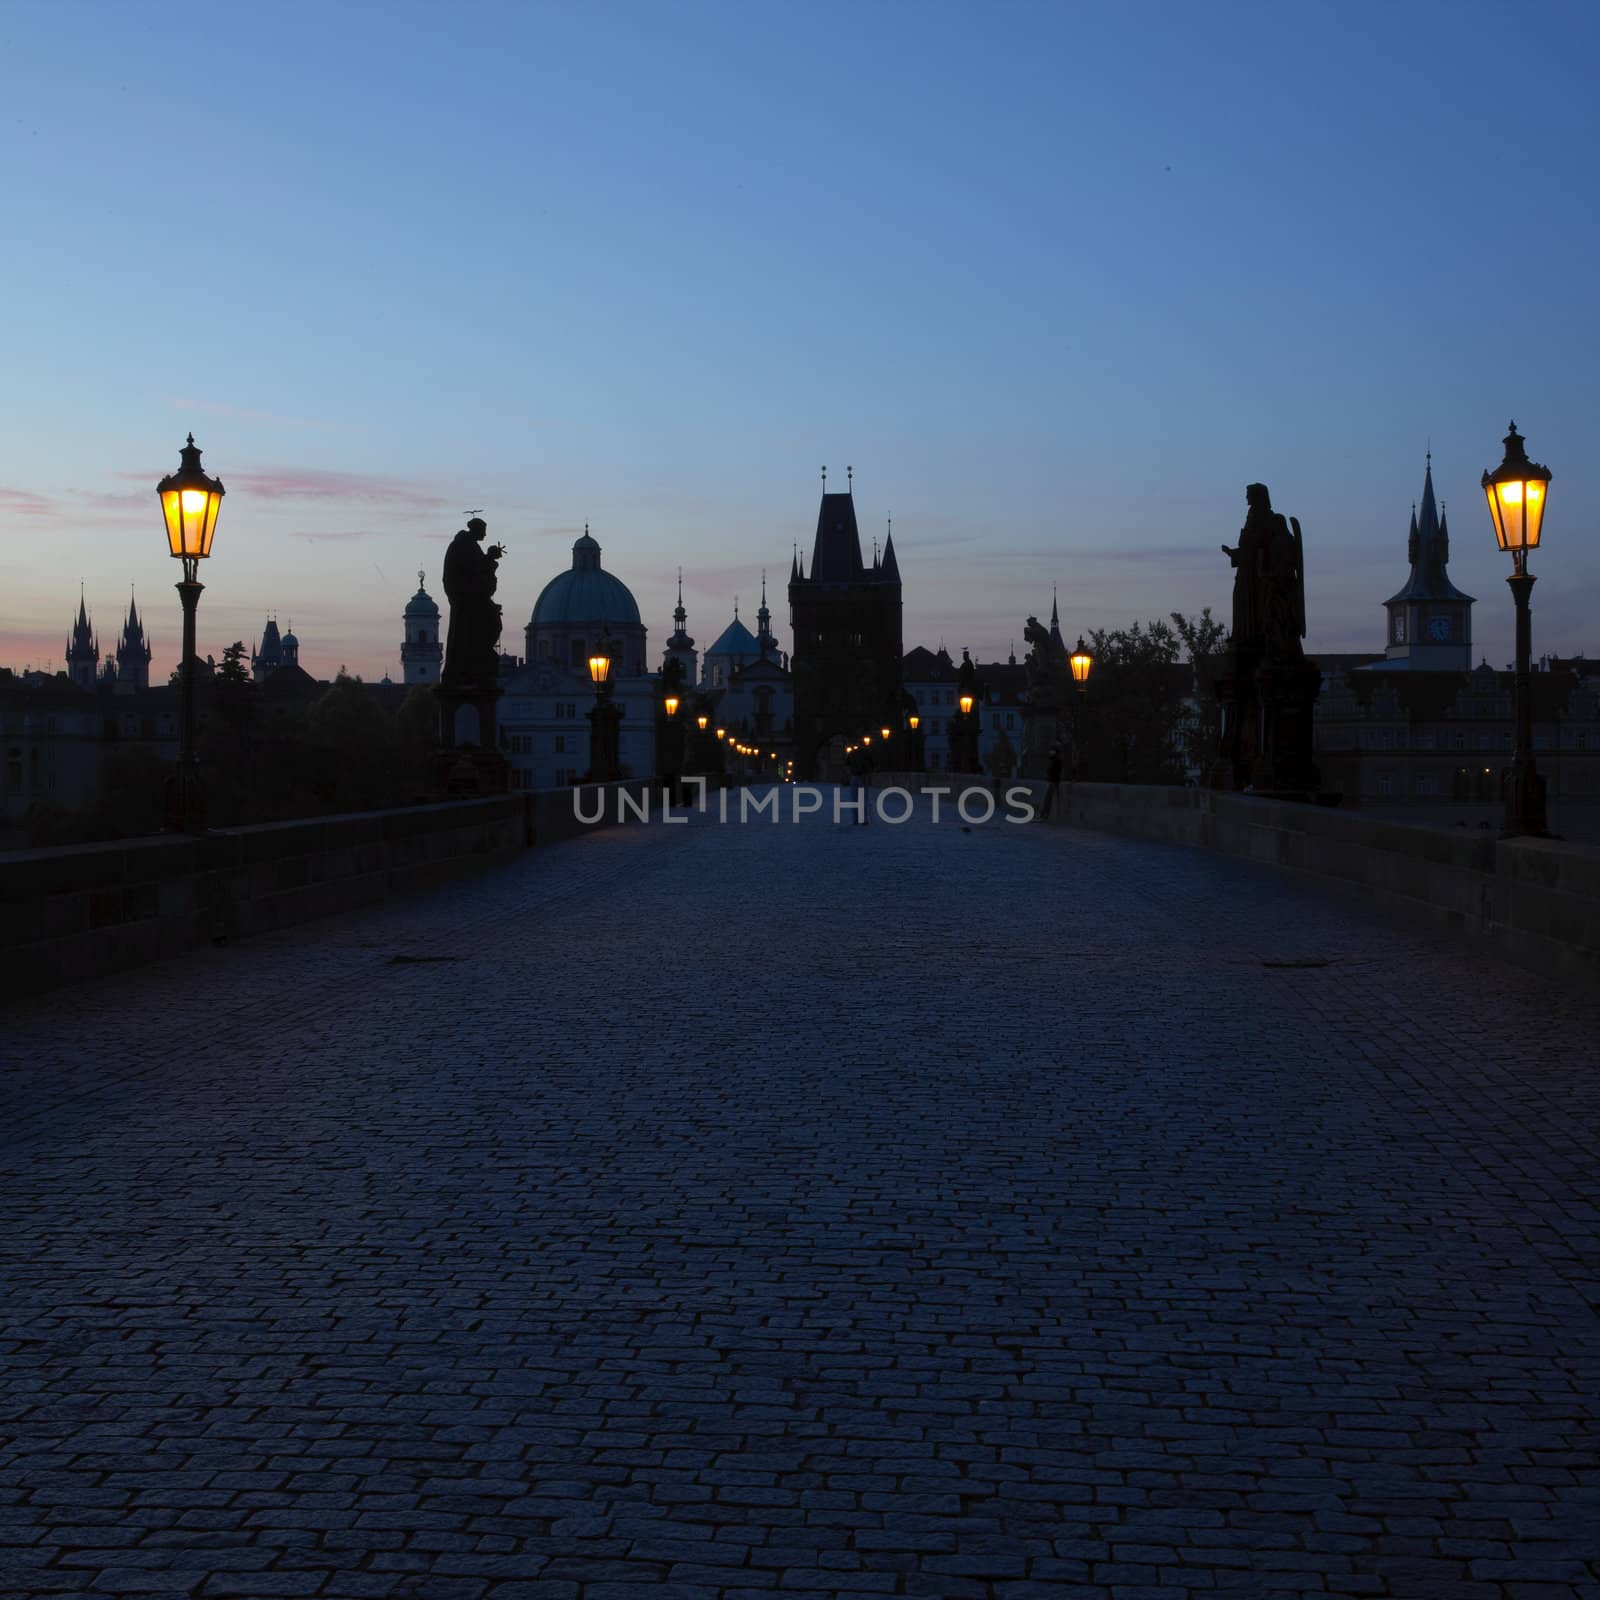 Charles bridge at dawn, Prague, Czech Republic by phbcz